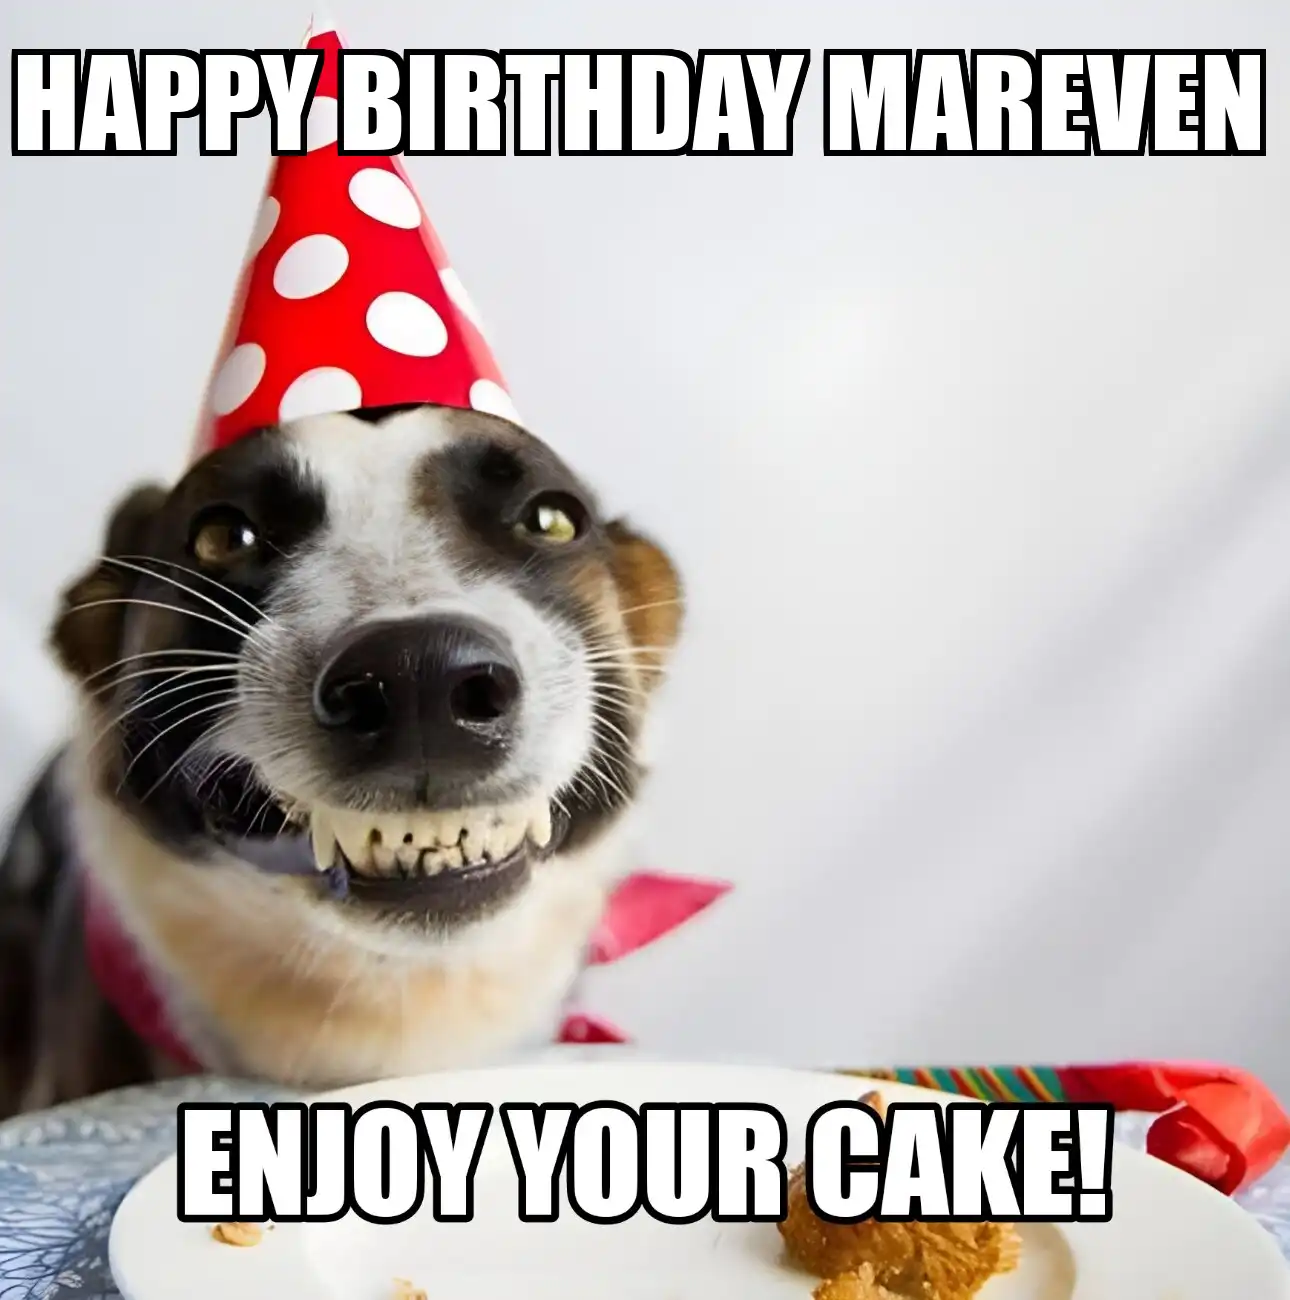 Happy Birthday Mareven Enjoy Your Cake Dog Meme